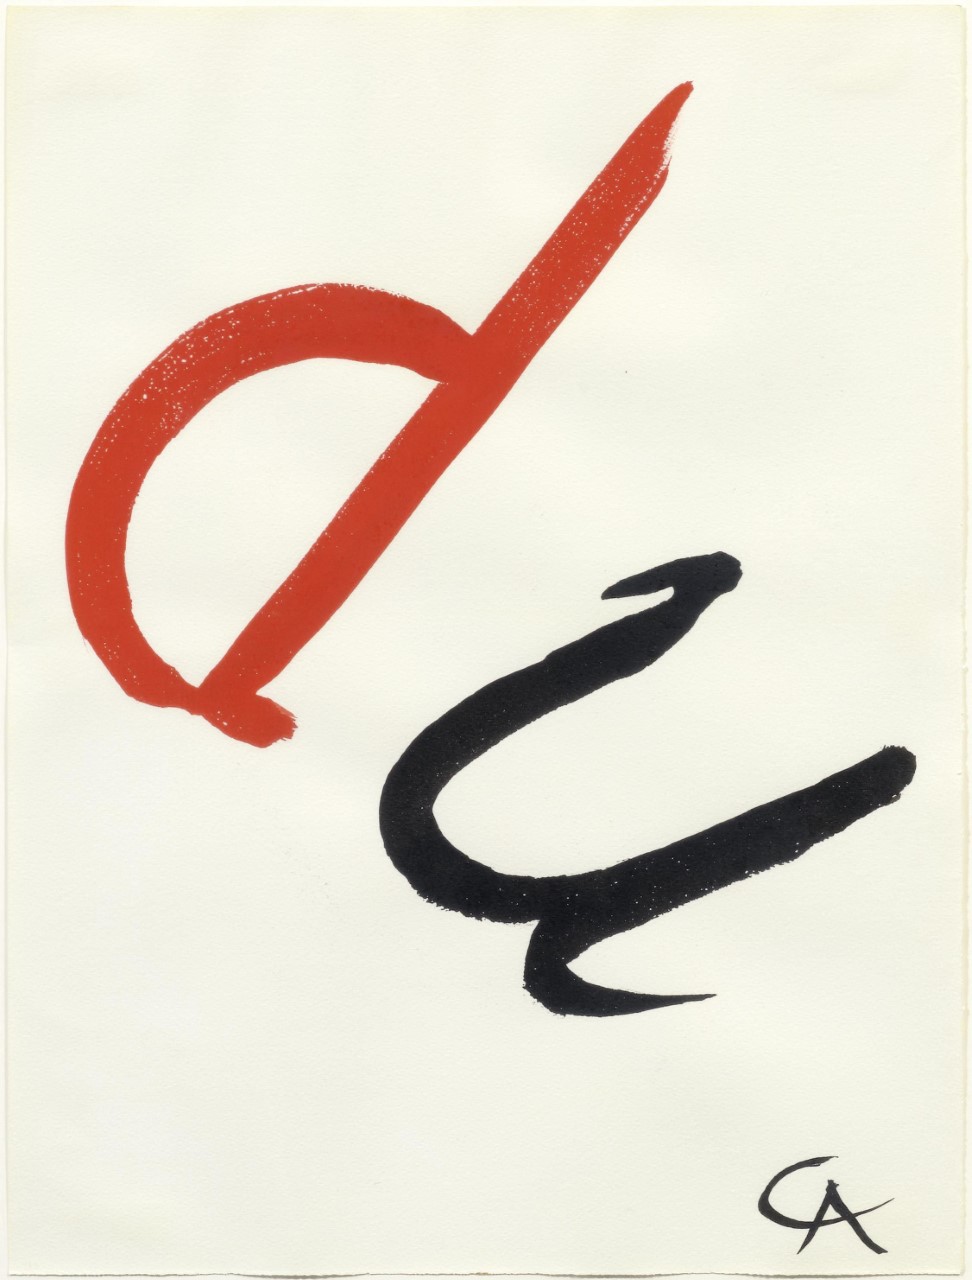 Alexander Calder

